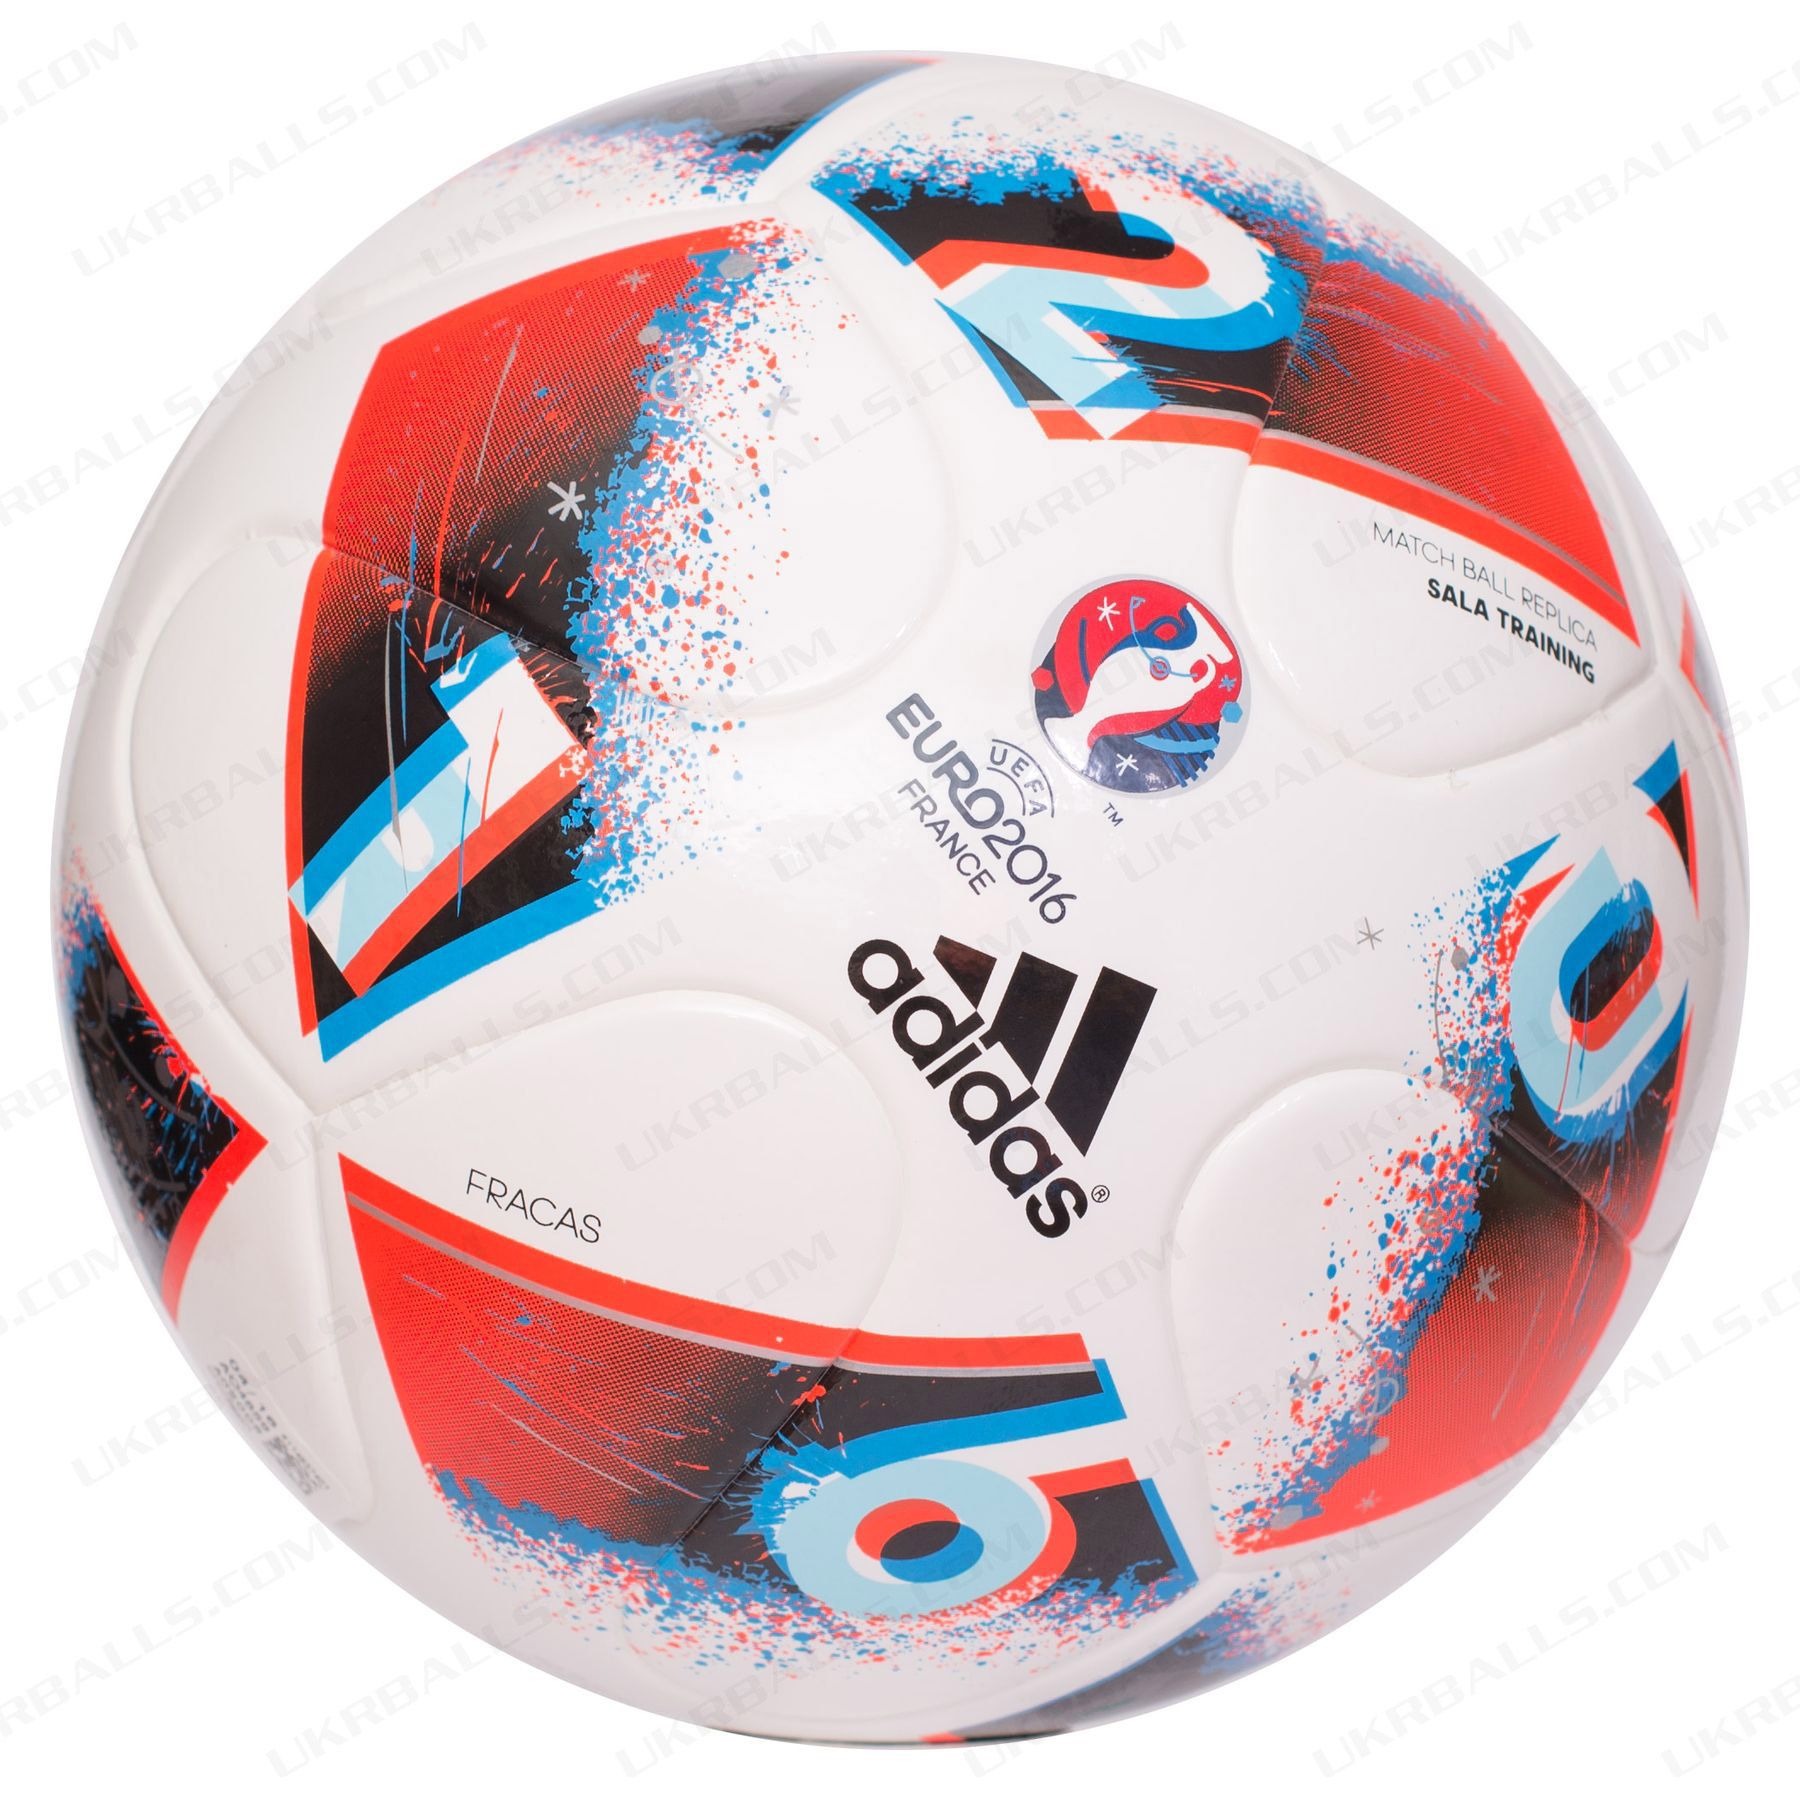 Футзальный мяч Adidas EURO 2016 Fracas Sala Training, артикул: AO4859 фото 7